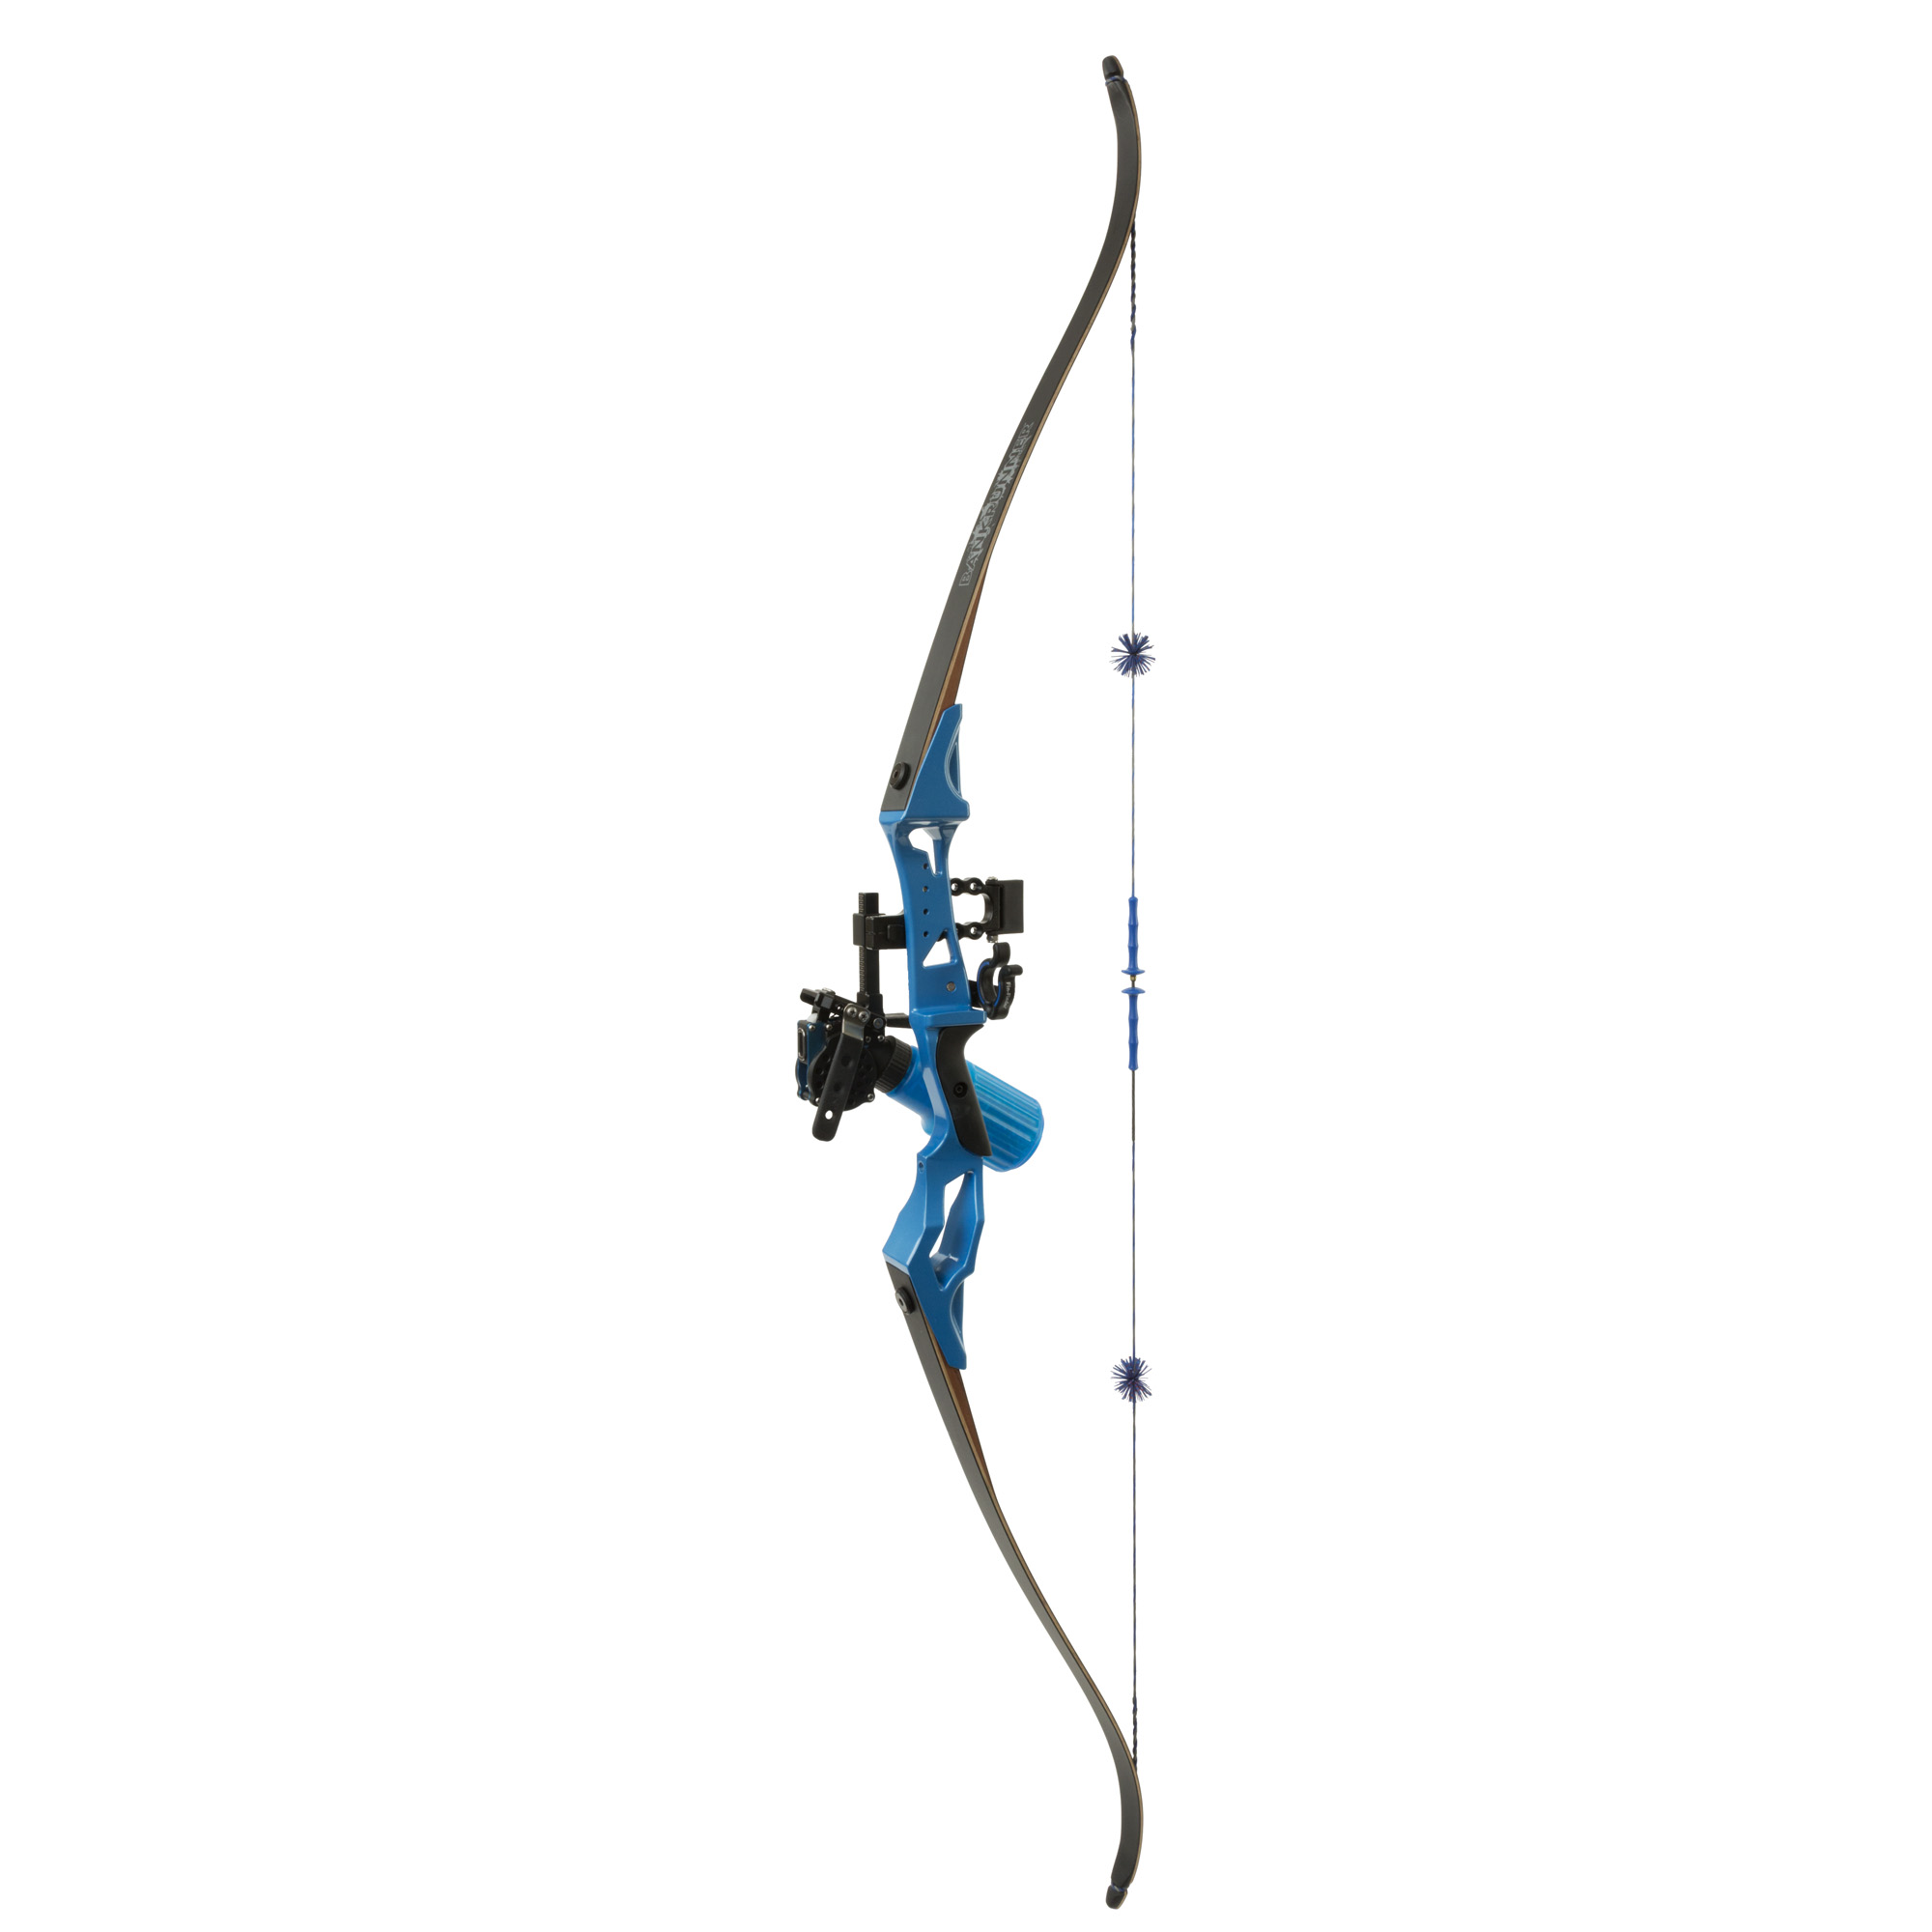 Fin Finder Bank Runner Bowfishing Recurve Package W-winch Pro Bowfishing Reel Blue 35 lbs. RH